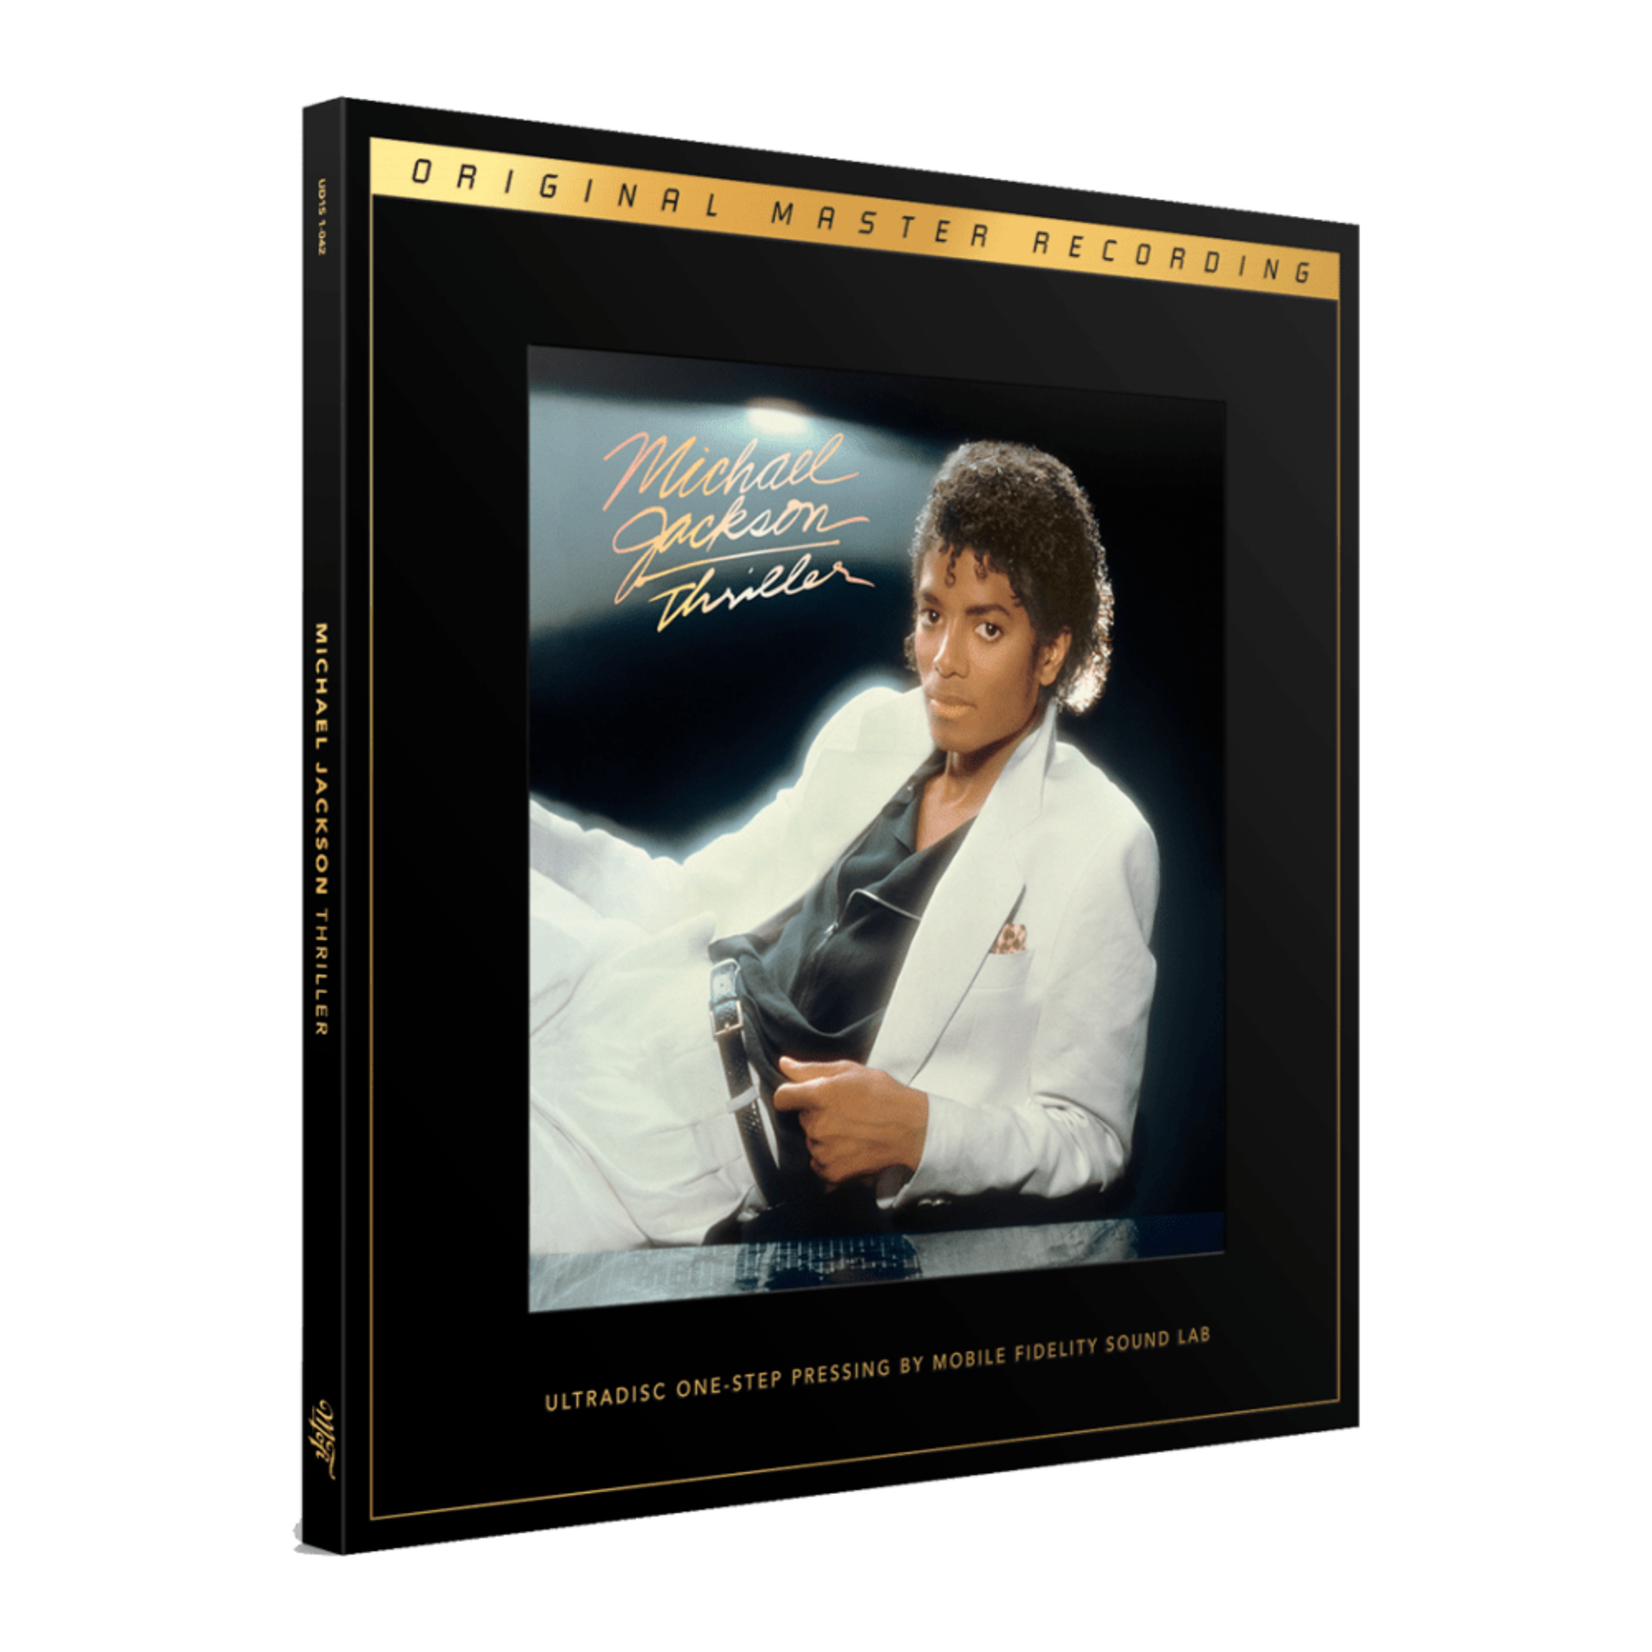 [New] Michael Jackson - Thriller (180g, 33rpm, supervinyl, ultradisc one-step)